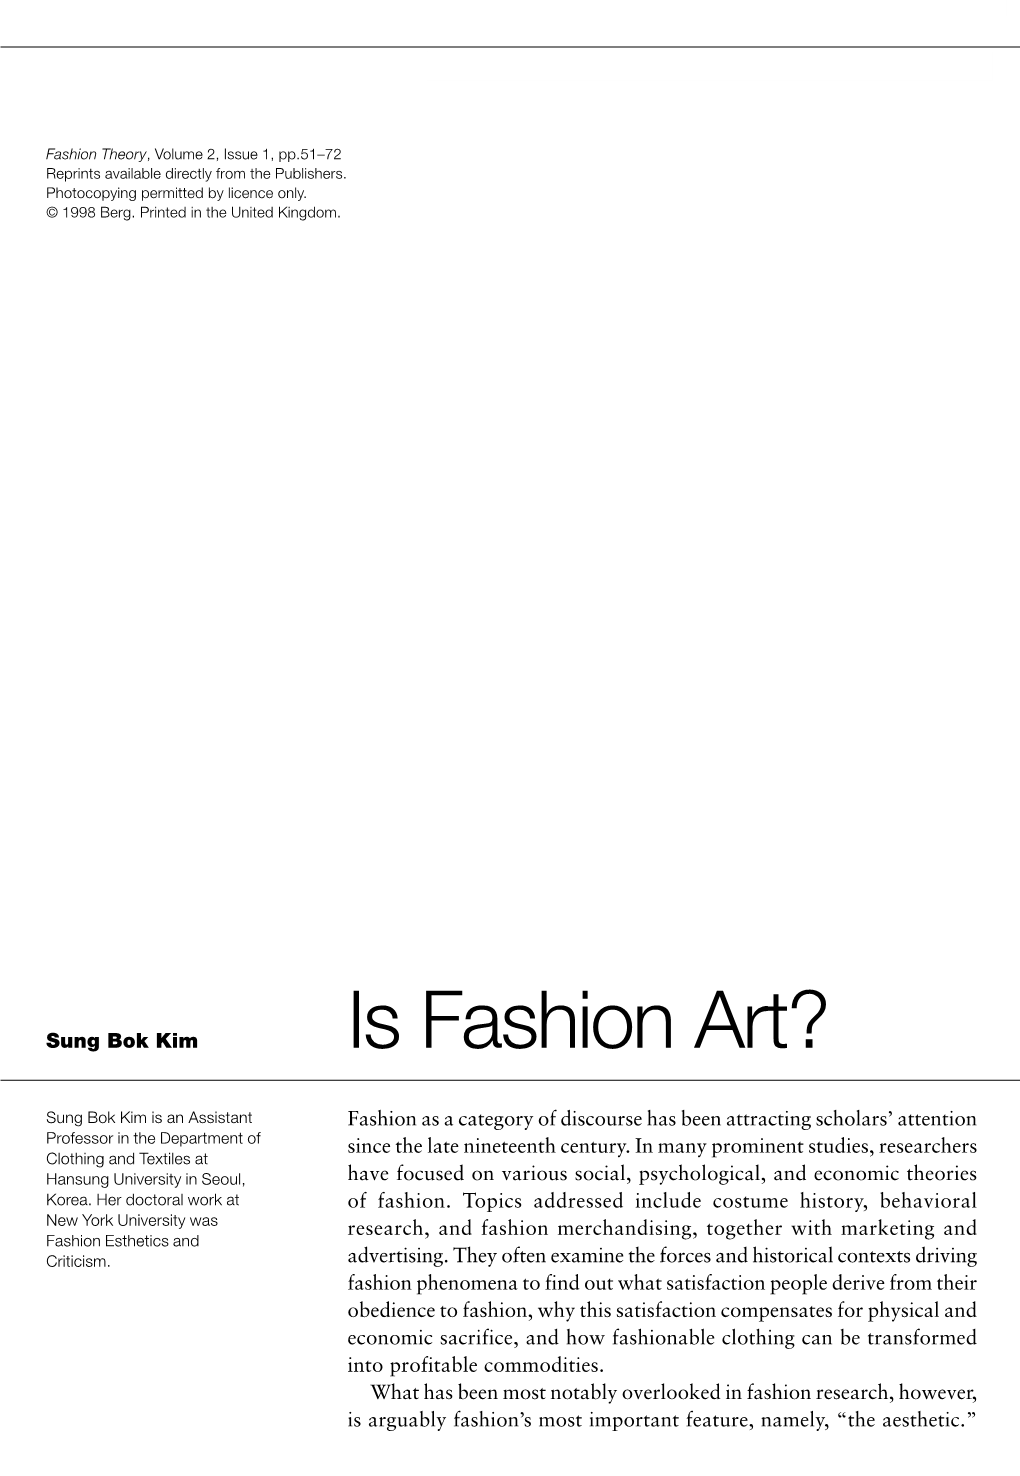 Is Fashion Art? 51